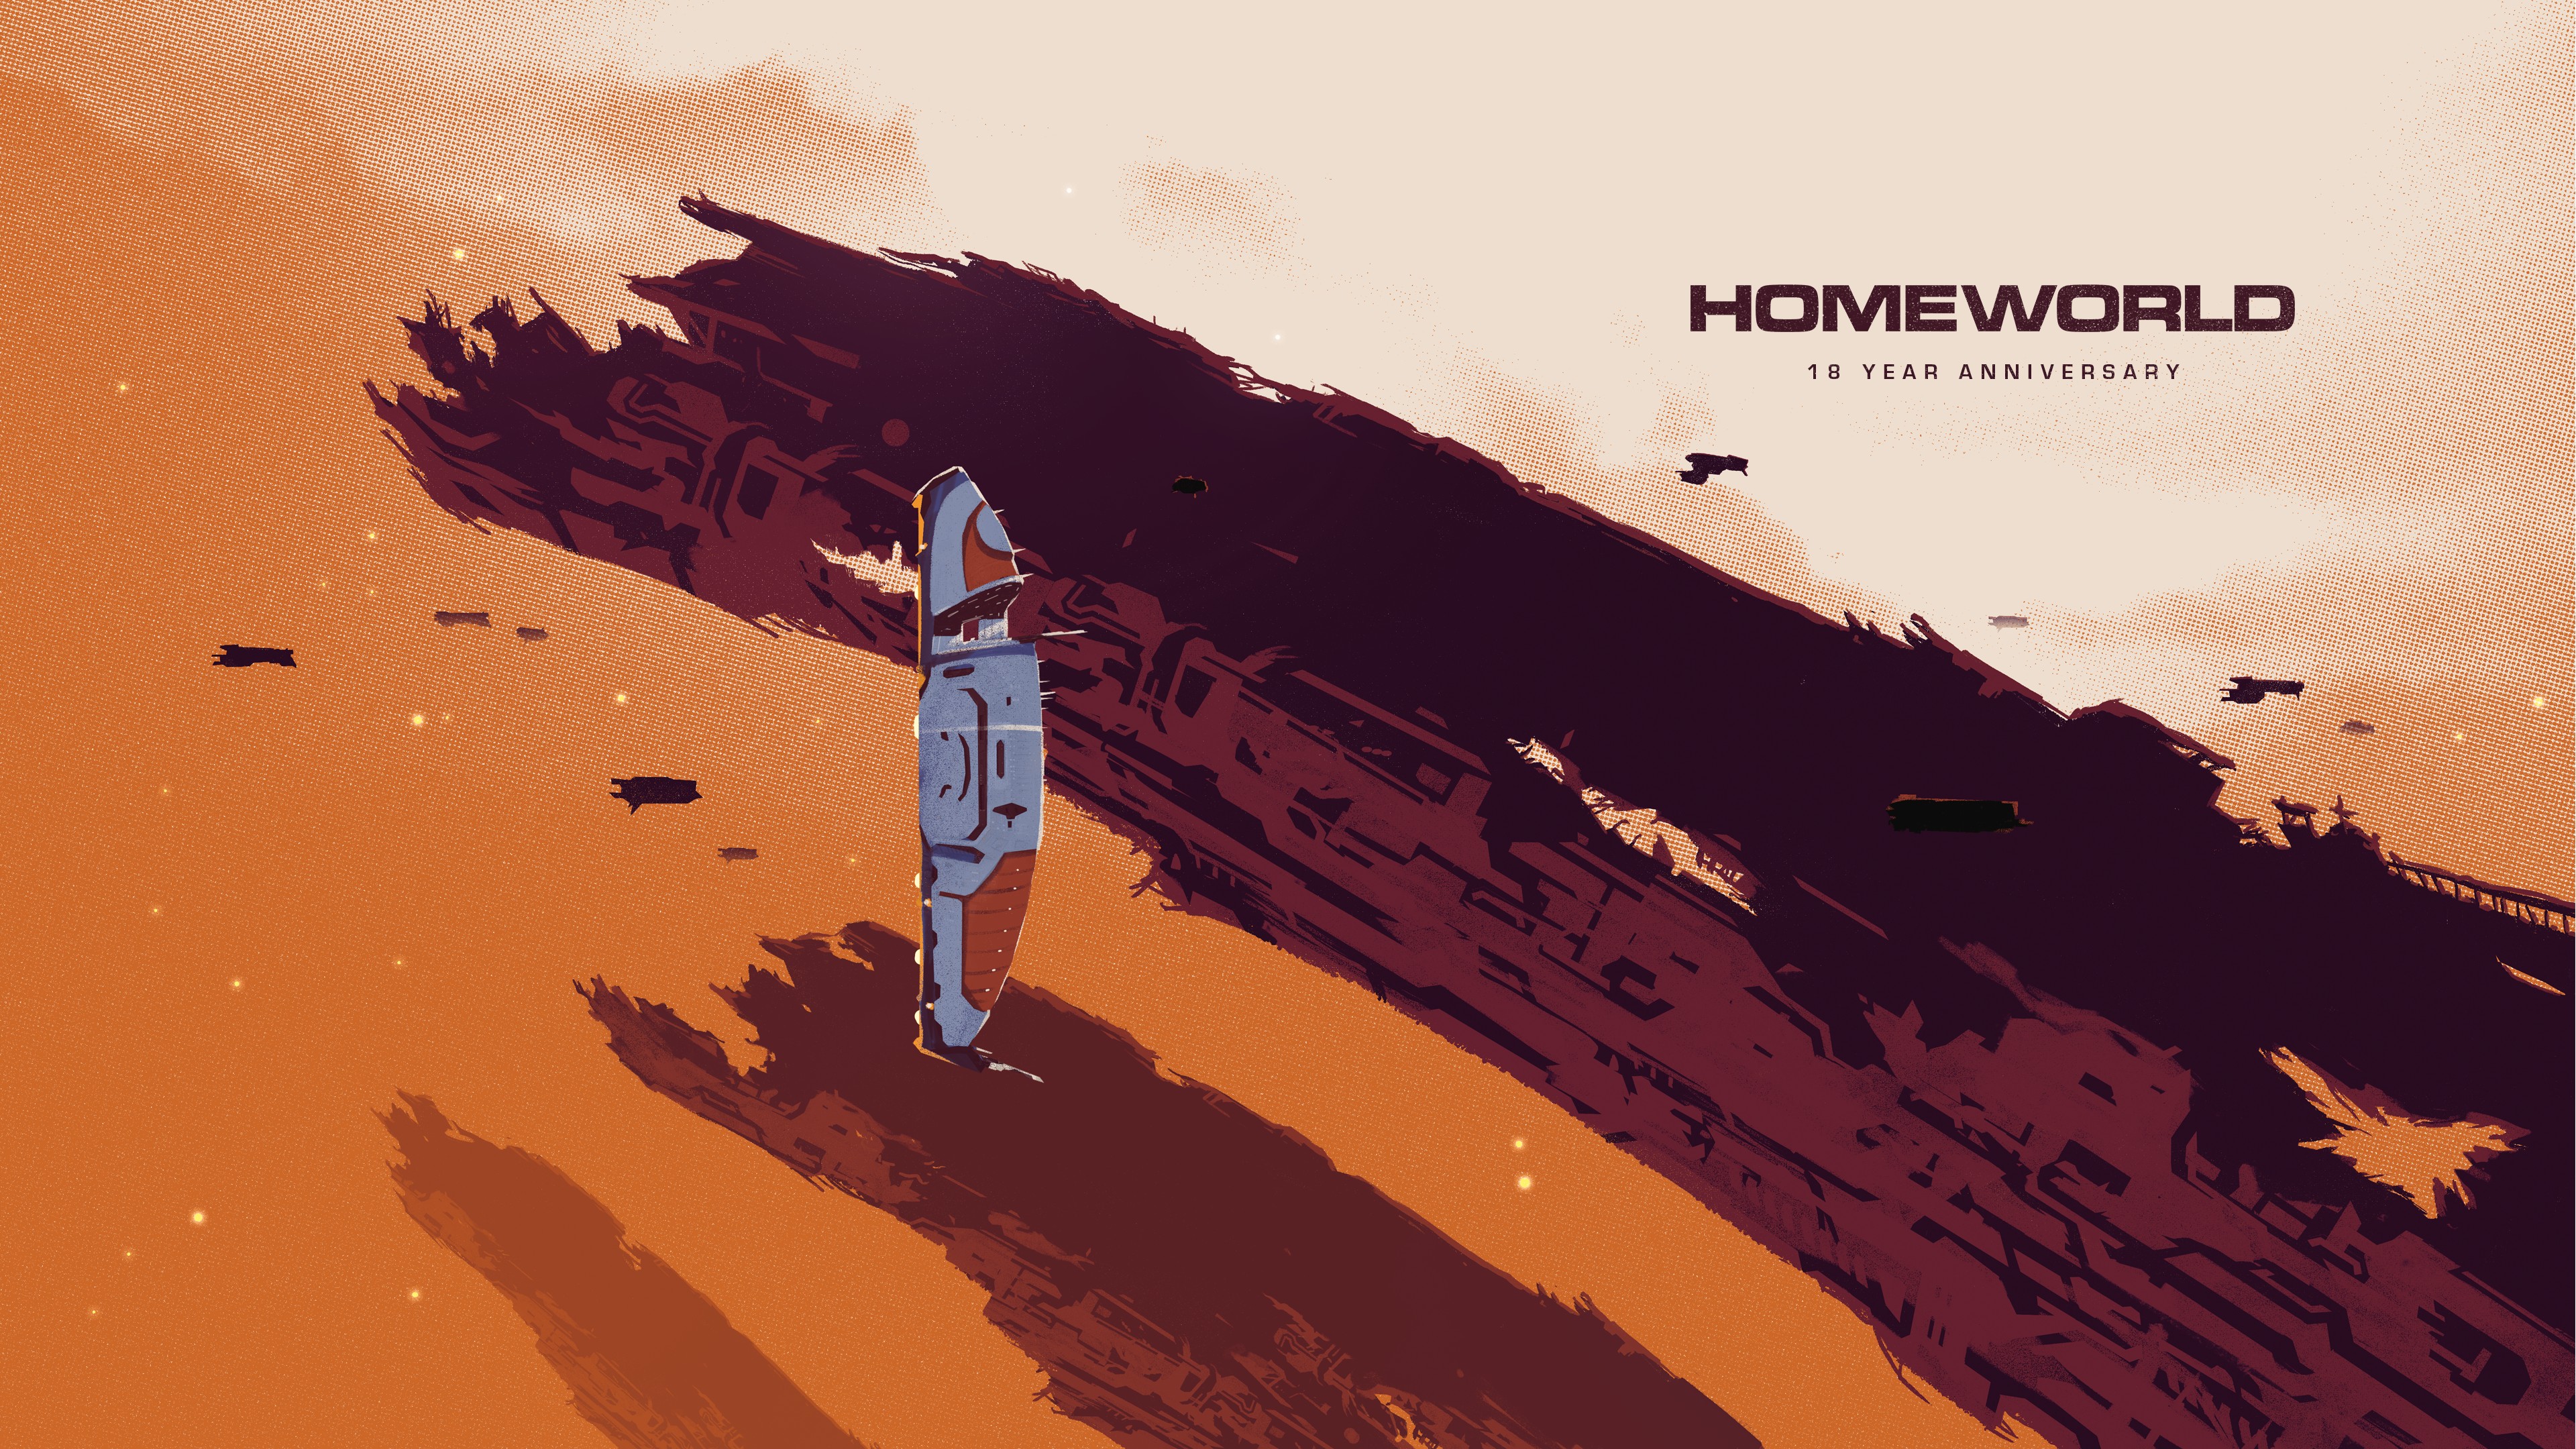 Homeworld, Science fiction, Spaceship, Computer game Wallpaper